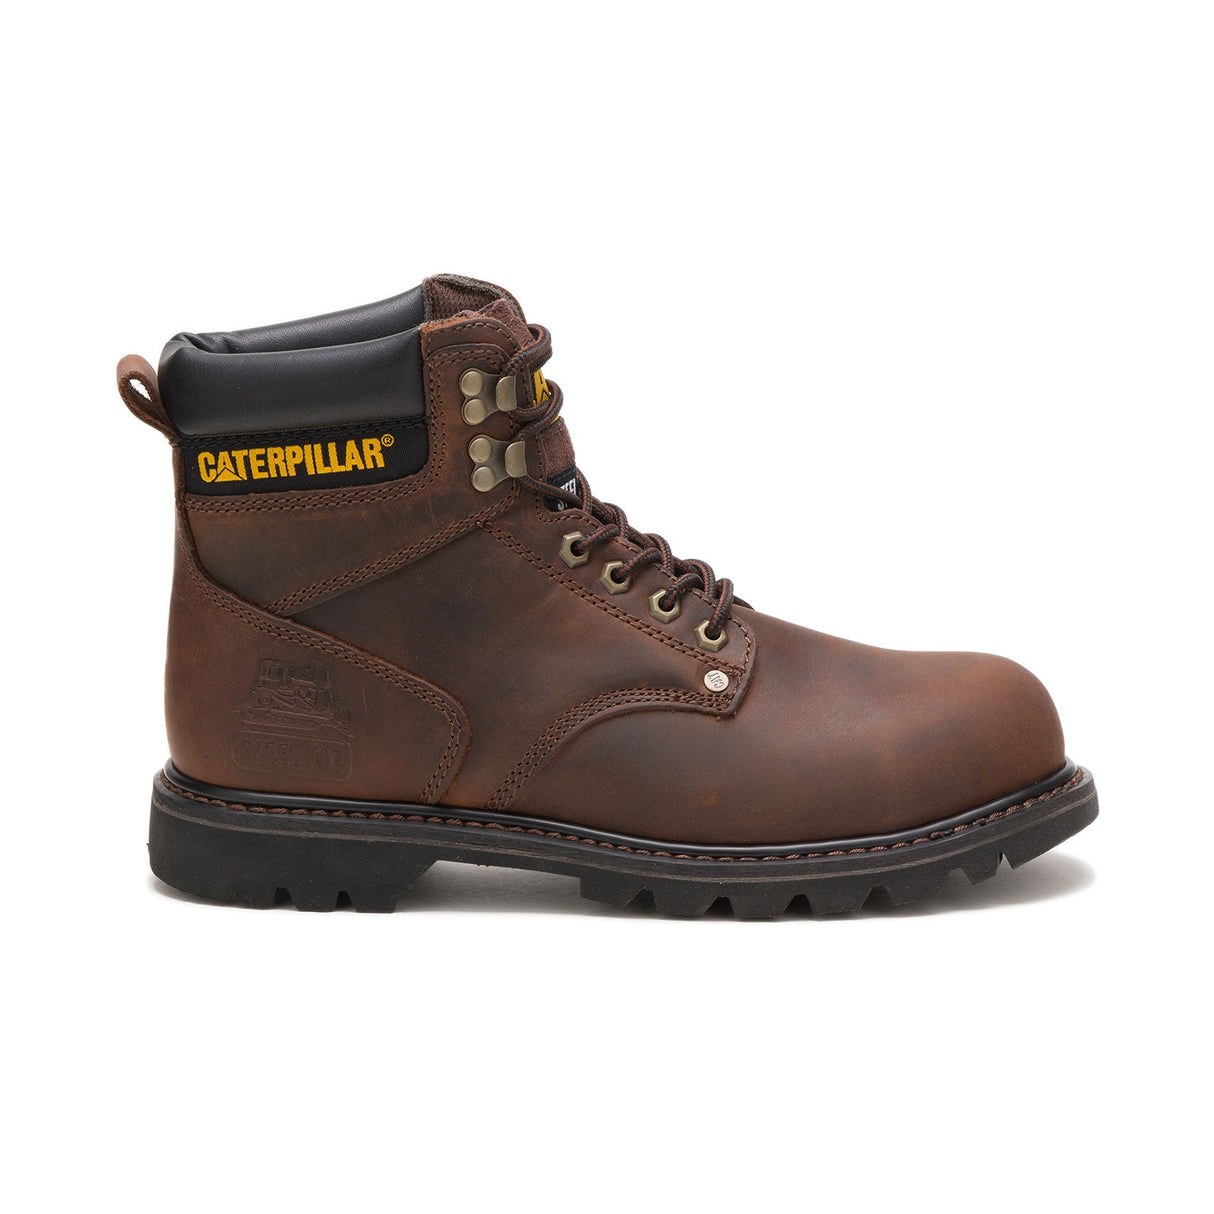 Caterpillar Second Shift Men's Steel-Toe Work Boots P89586-1